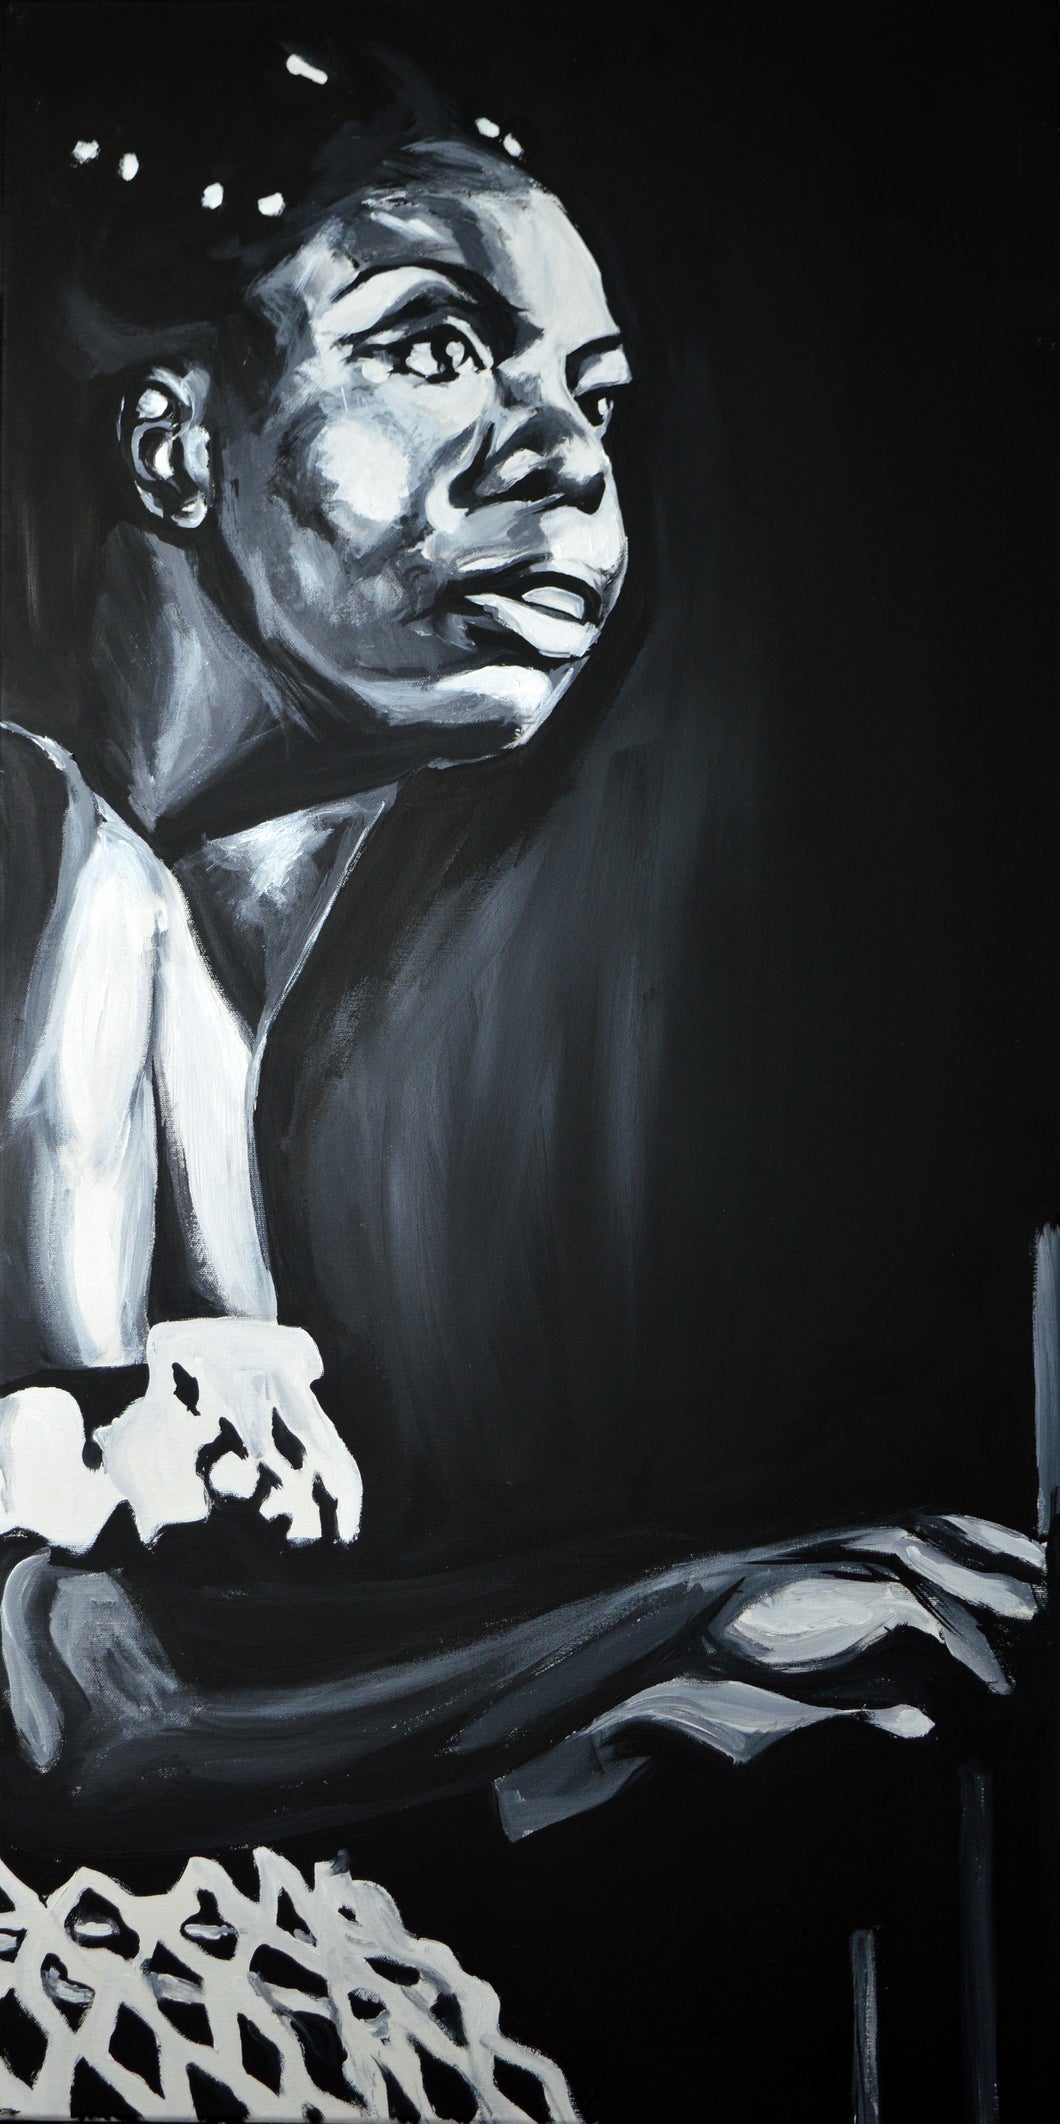 Nina Simone Painting - Melissa O'Brien Art